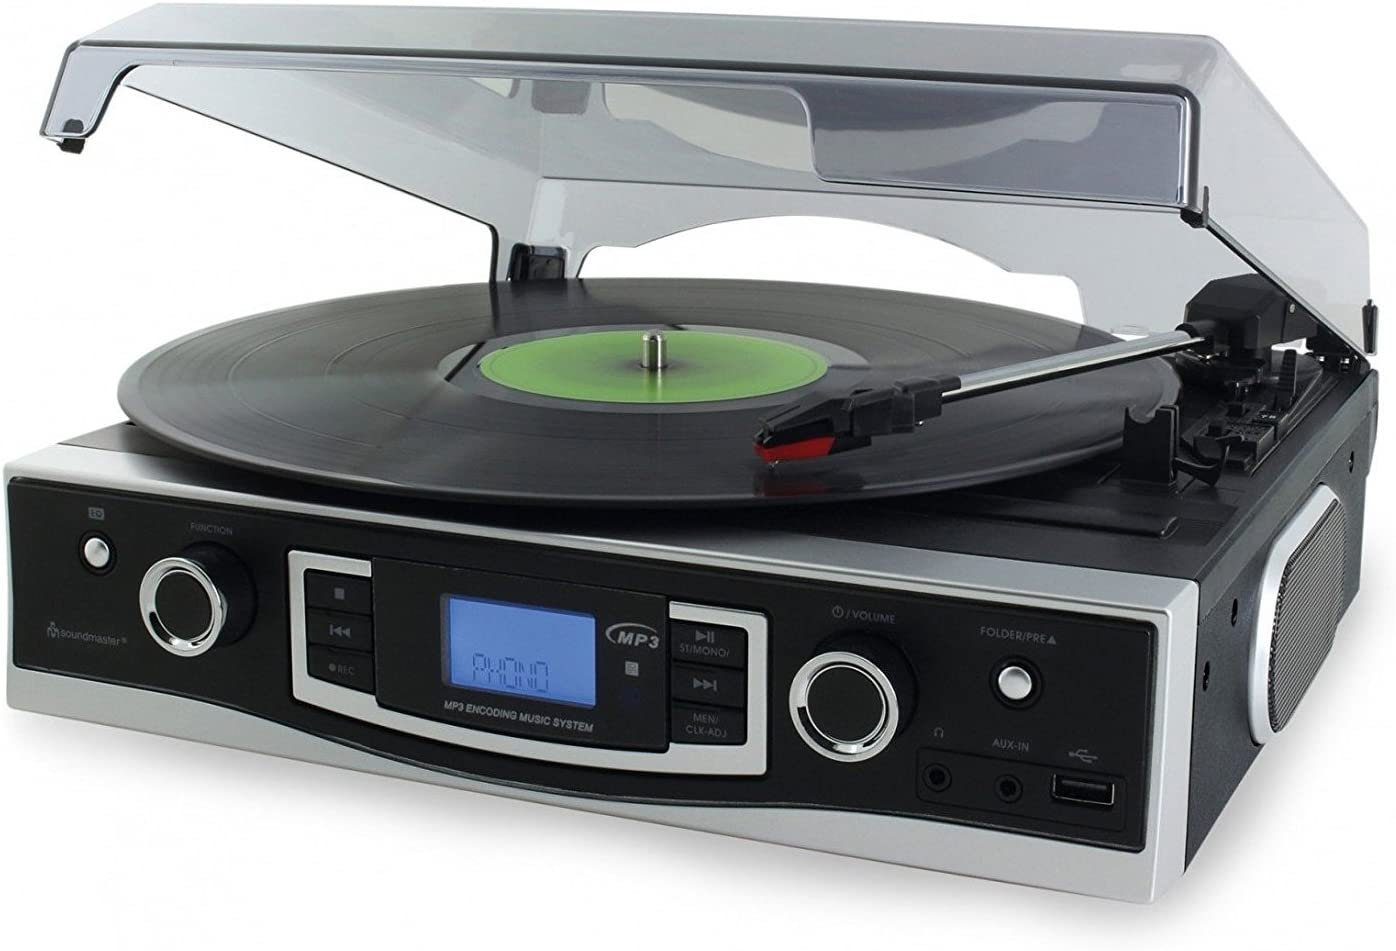 Soundmaster PL530 Nostalgieradio mit Plattenspieler & Encoding-Funktion  Plattenspieler